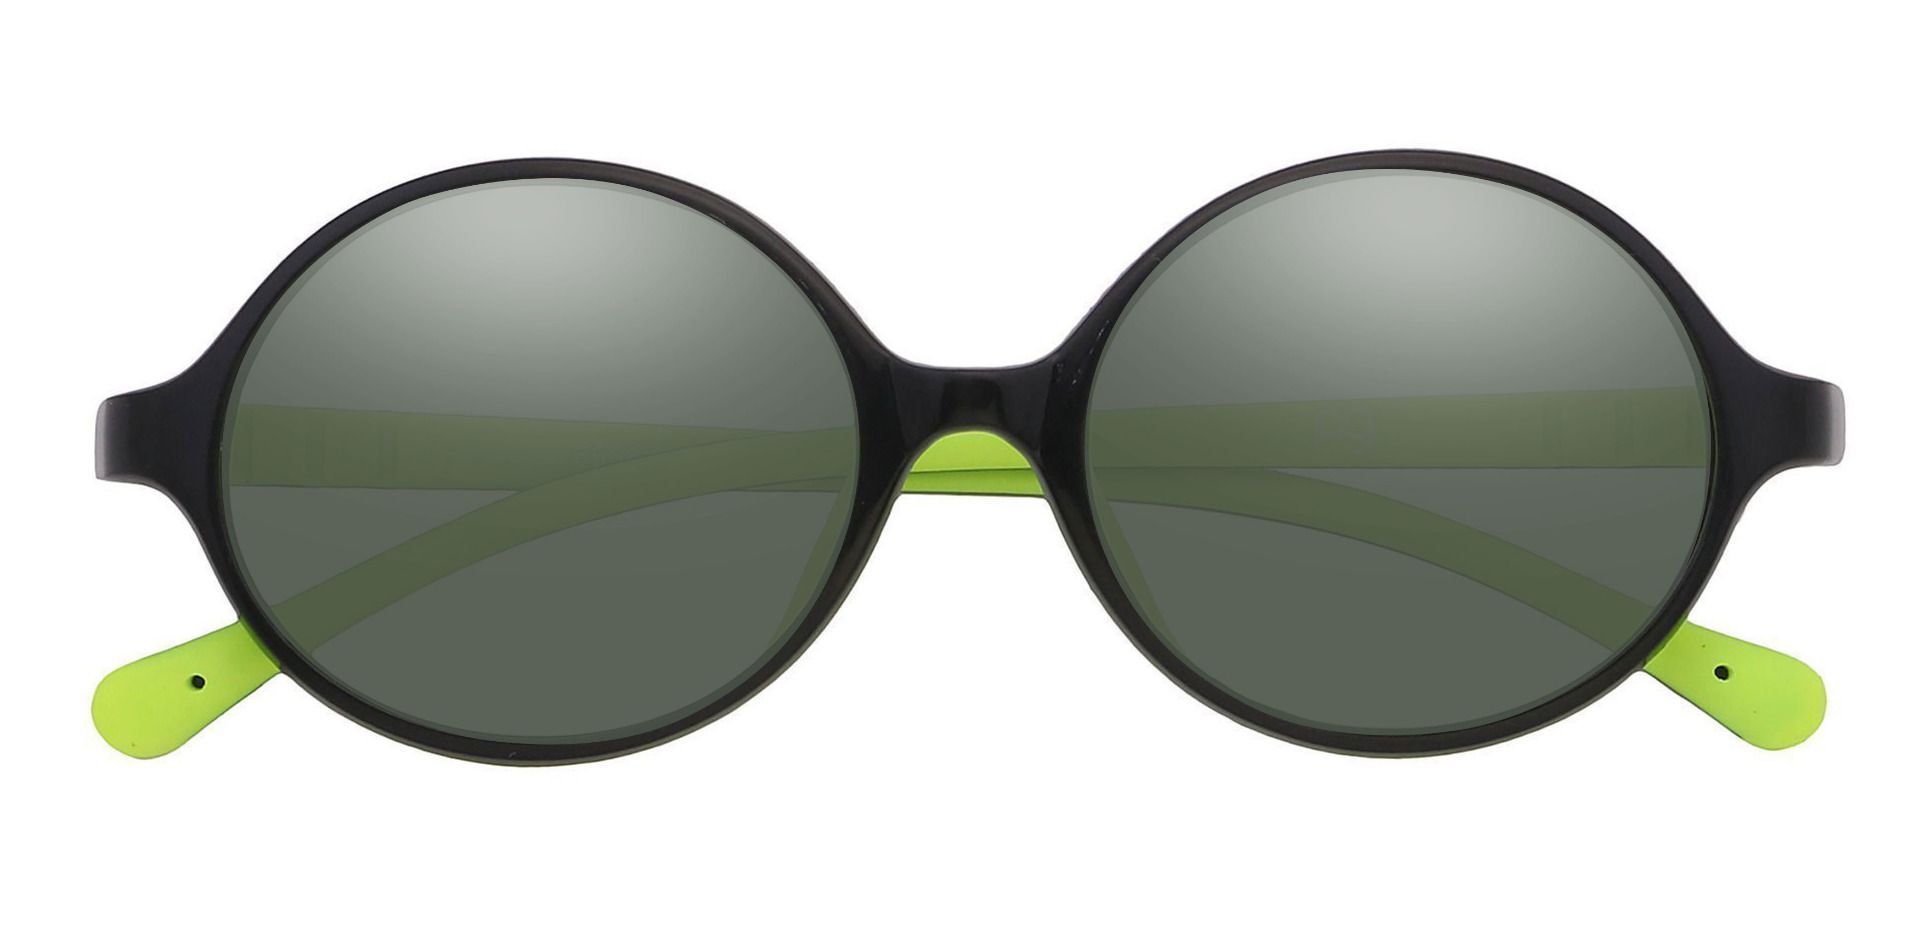 Dagwood Round Prescription Sunglasses - Black Frame With Green Lenses